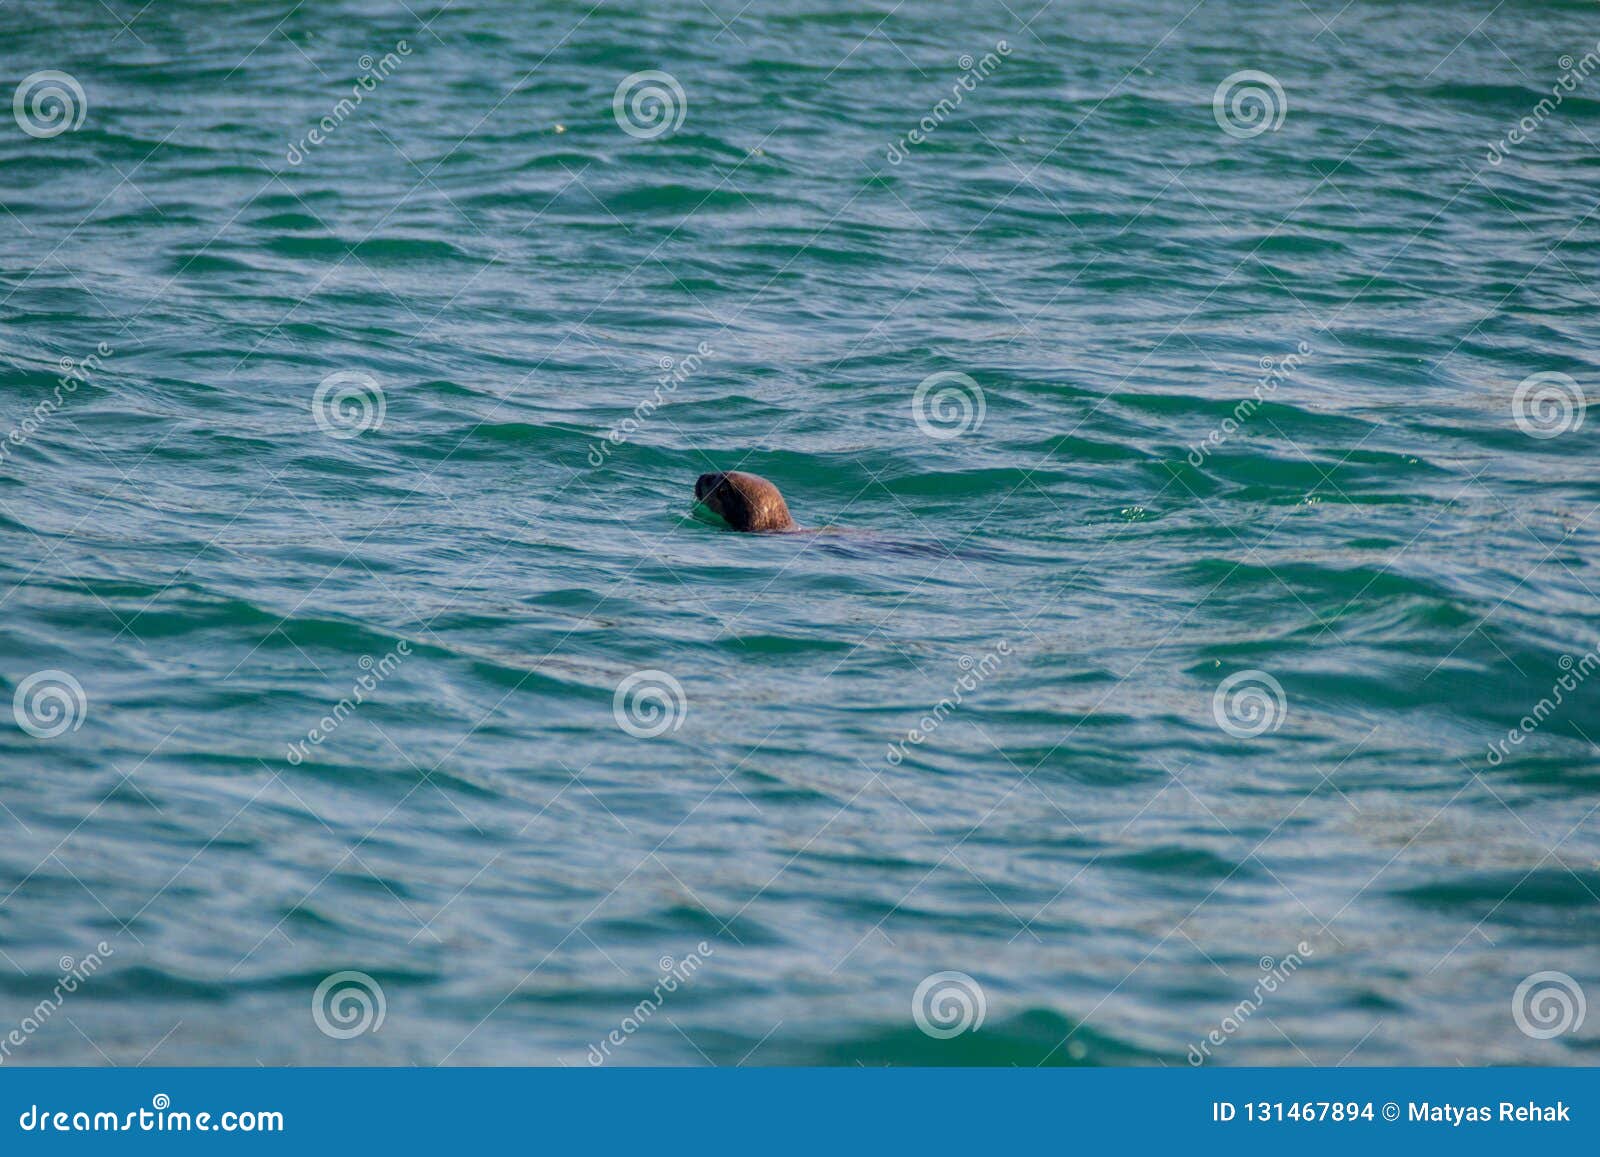 sea otter in protected area monumento nacional islotes de punihuil on chiloe island, chi